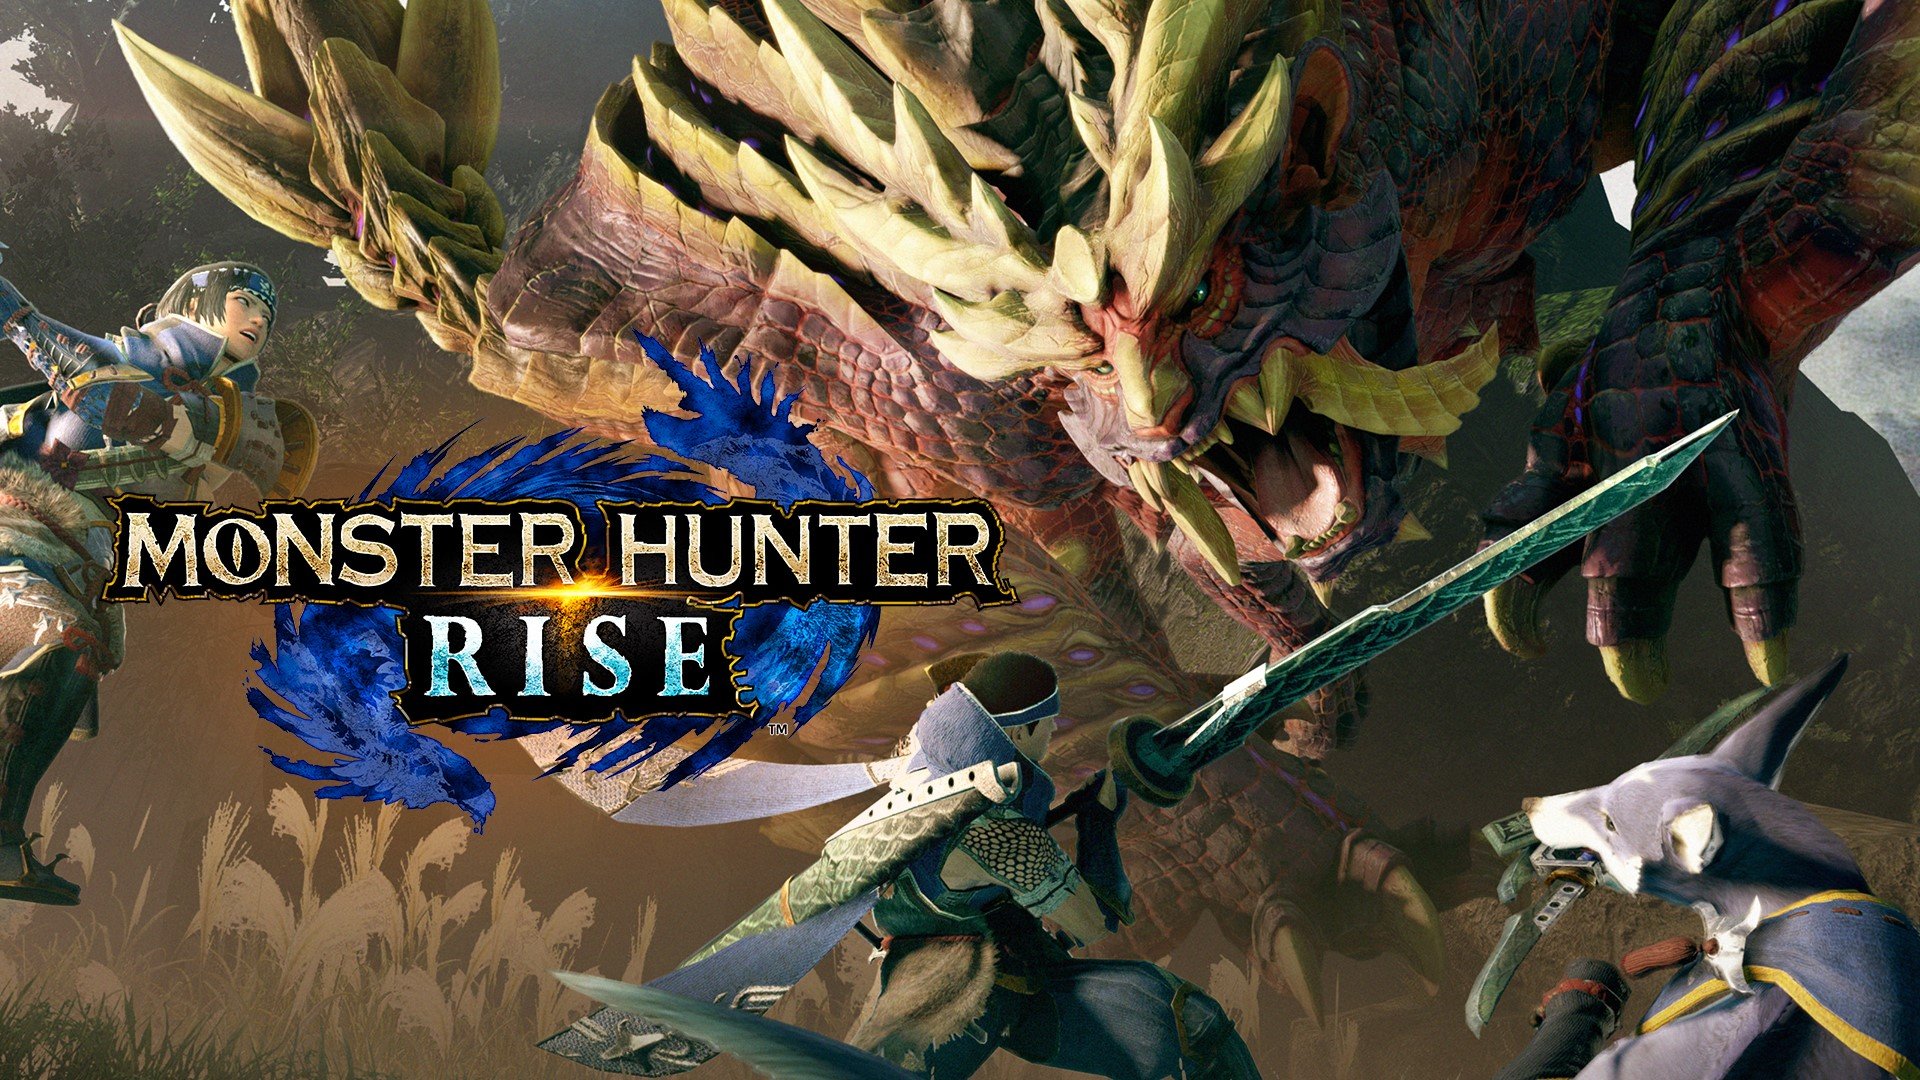 1014533 descargar imagen monster hunter: rise, videojuego: fondos de pantalla y protectores de pantalla gratis